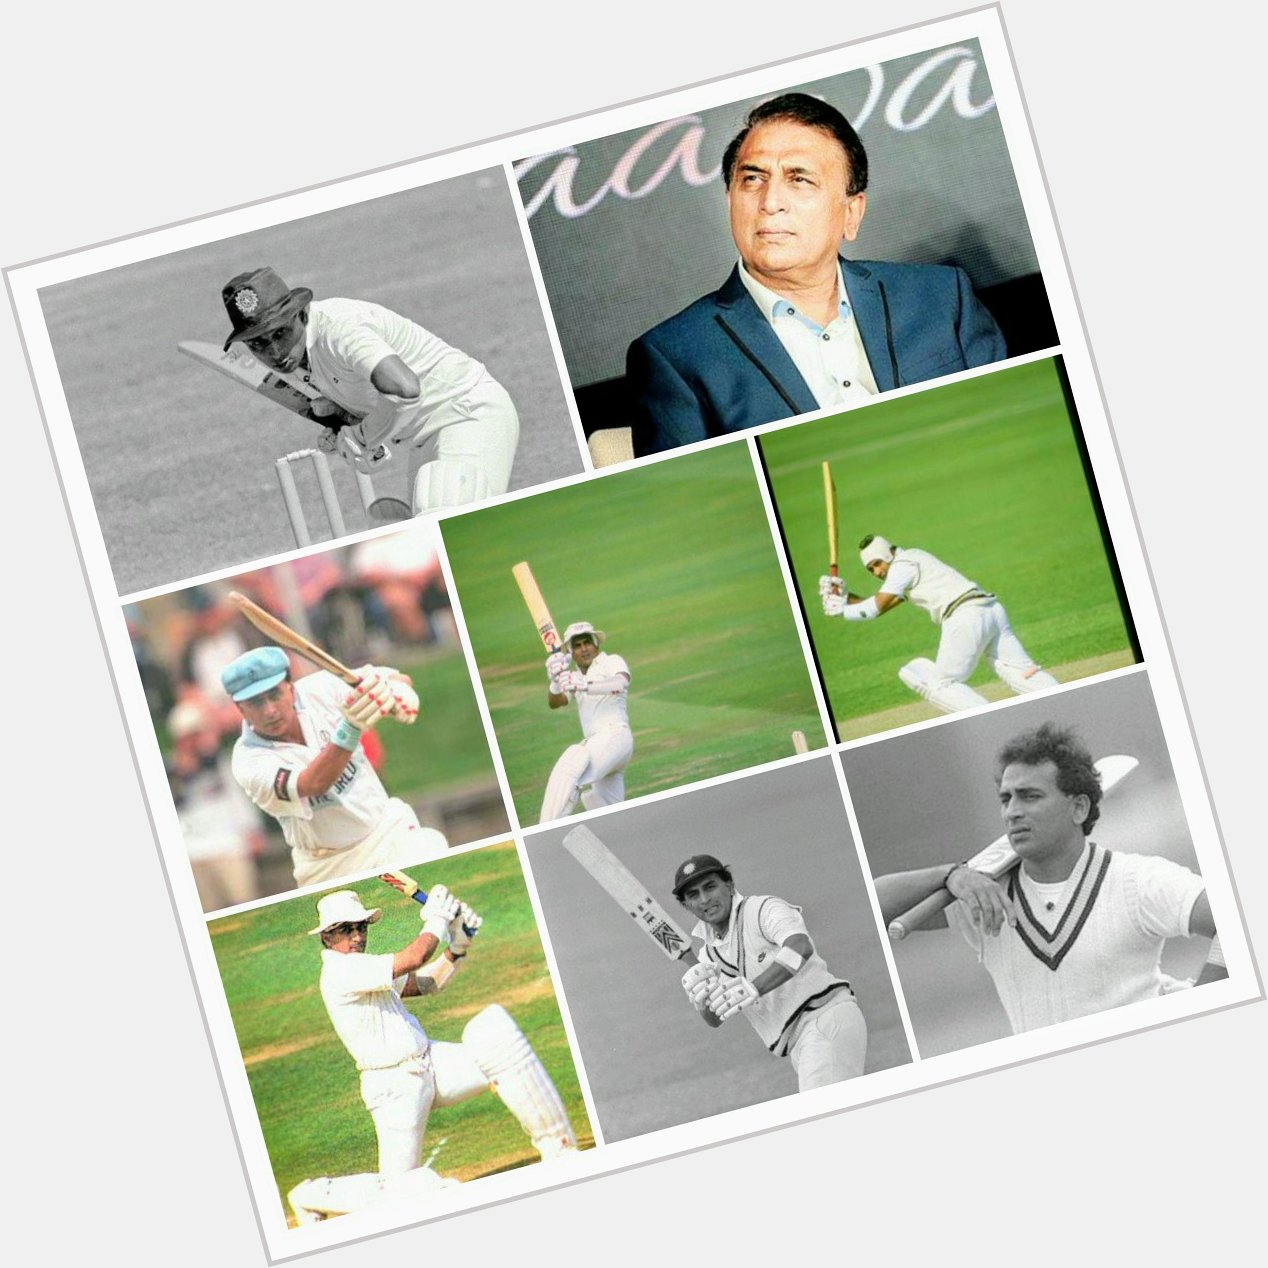 Wishing Batting Legend and former India captain Sunil Gavaskar a very Happy Birthday            